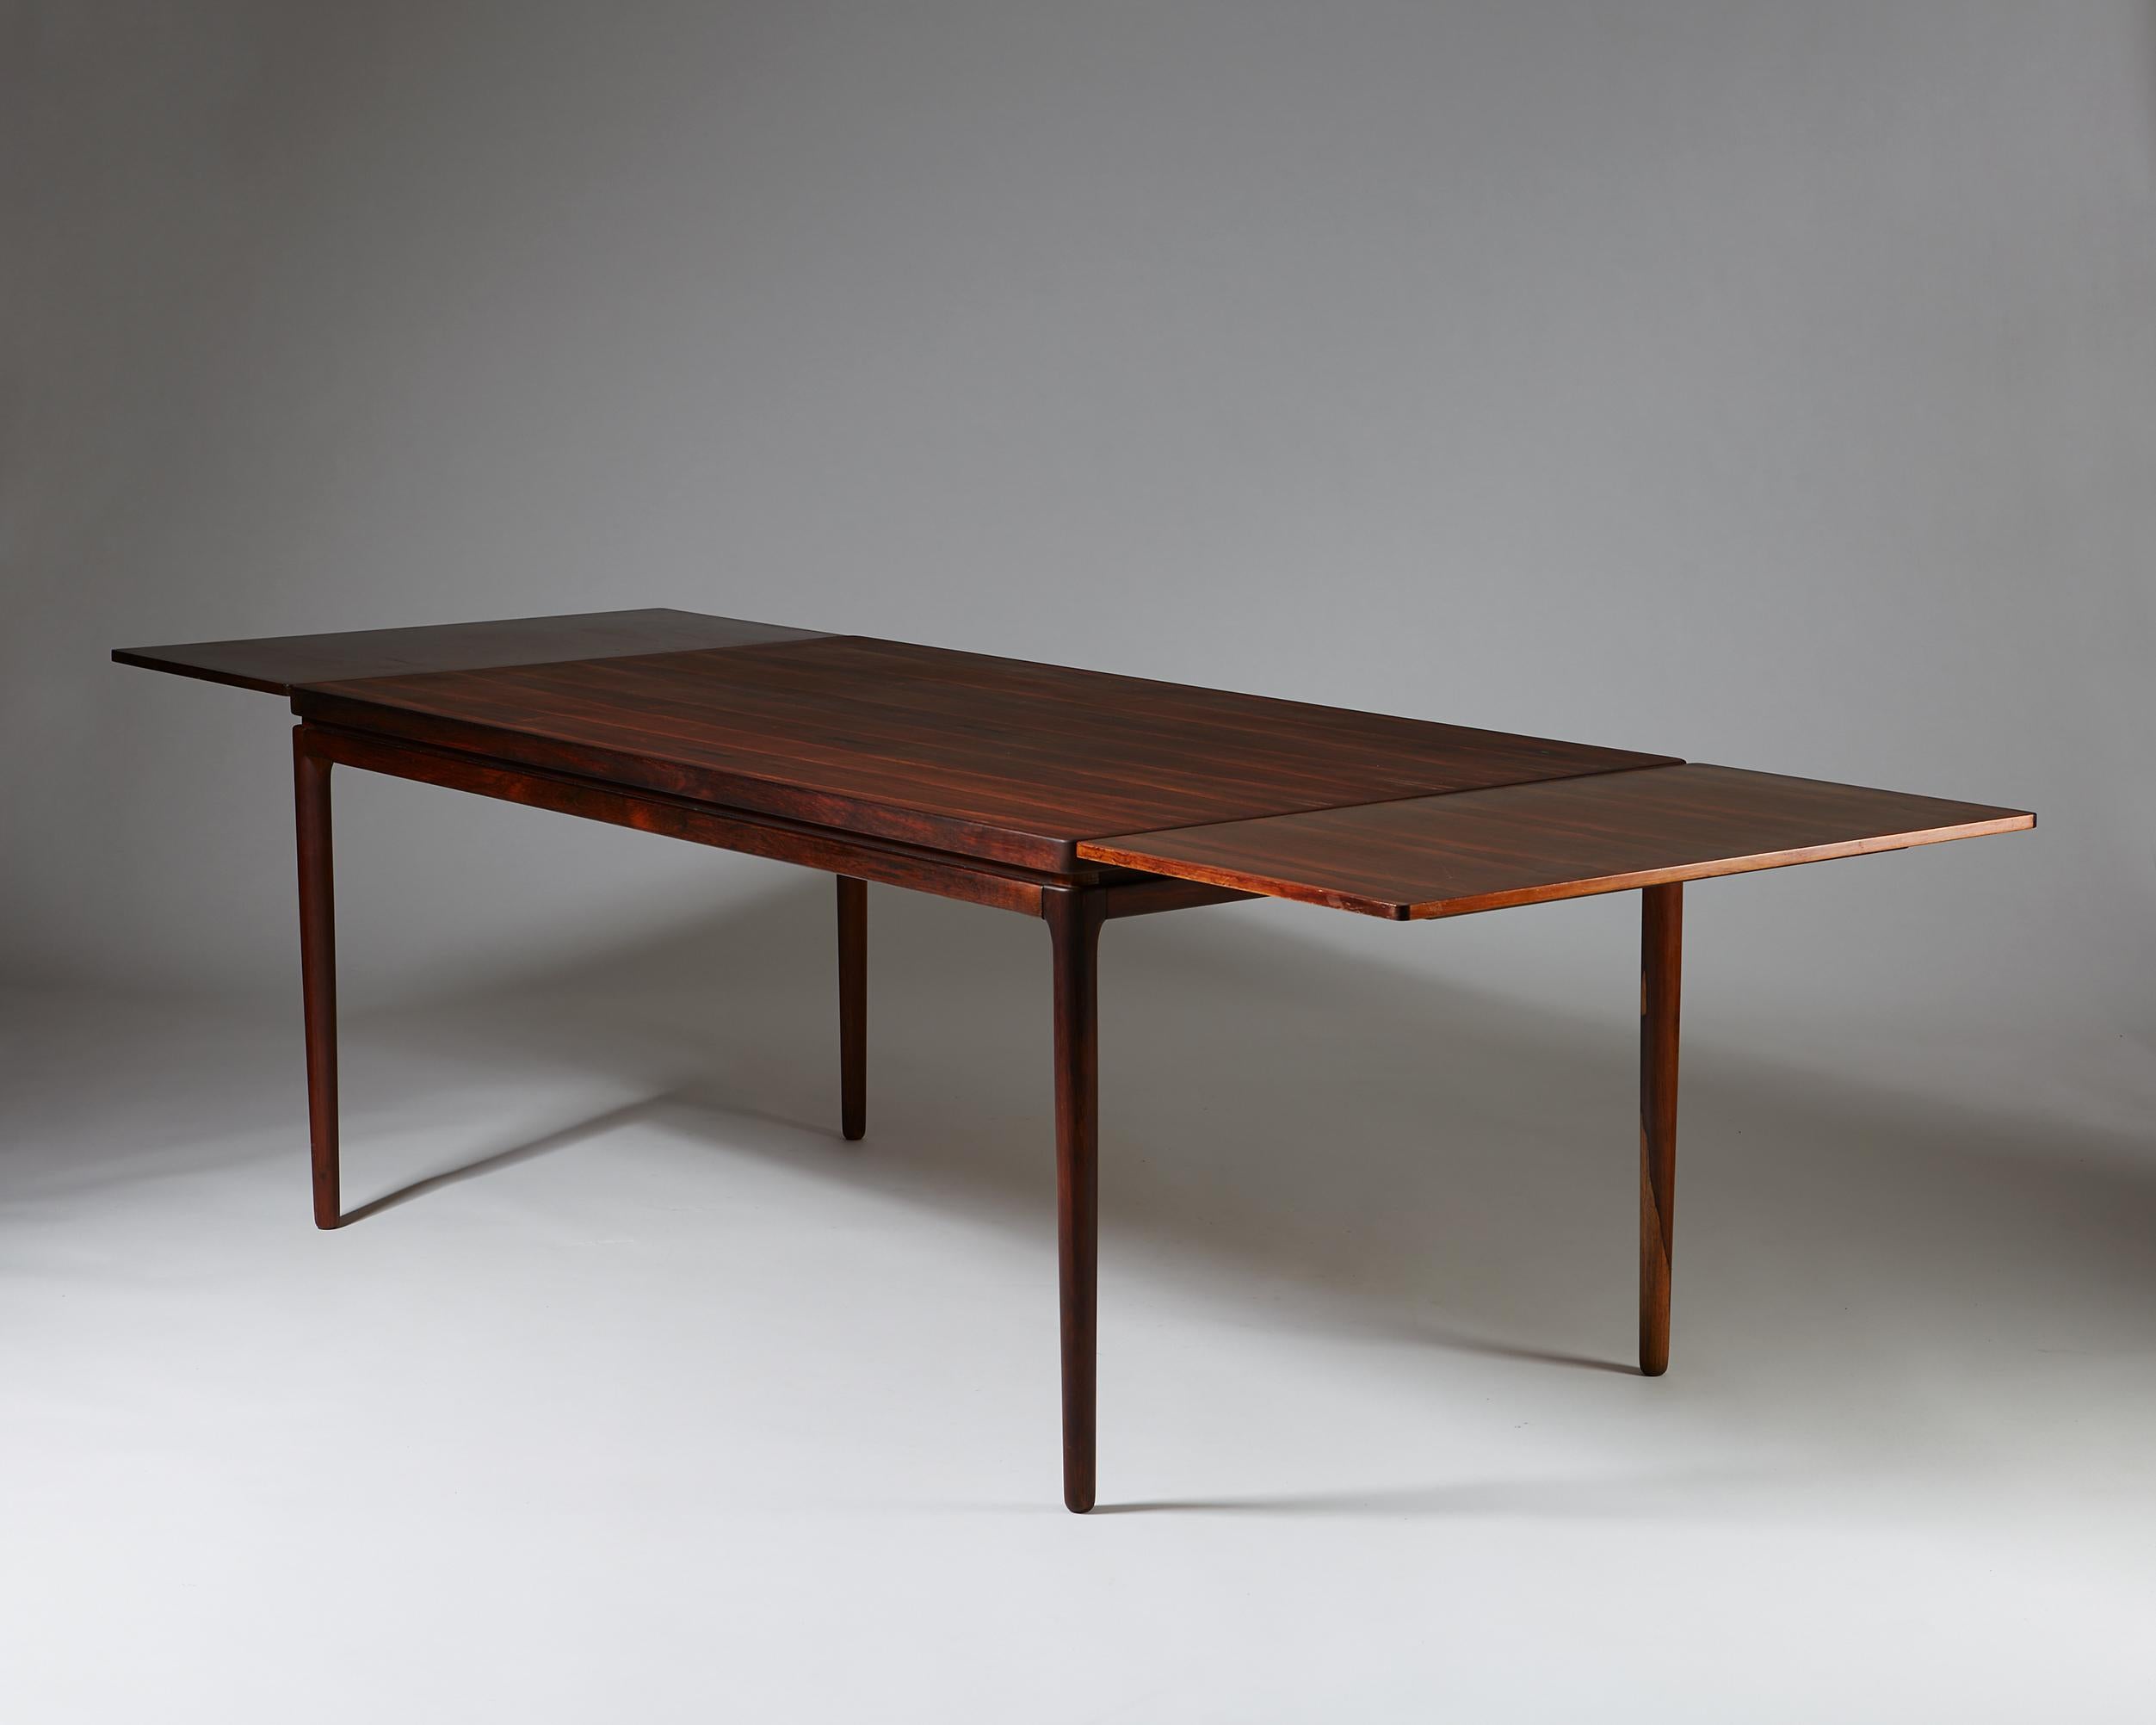 Dining table designed by Johannes Andersen for Christian Linnebergs Möbelfabrik,
Denmark. 1960s.

Rosewood.

Dimensions: 
H: 72 cm / 2' 4 1/2